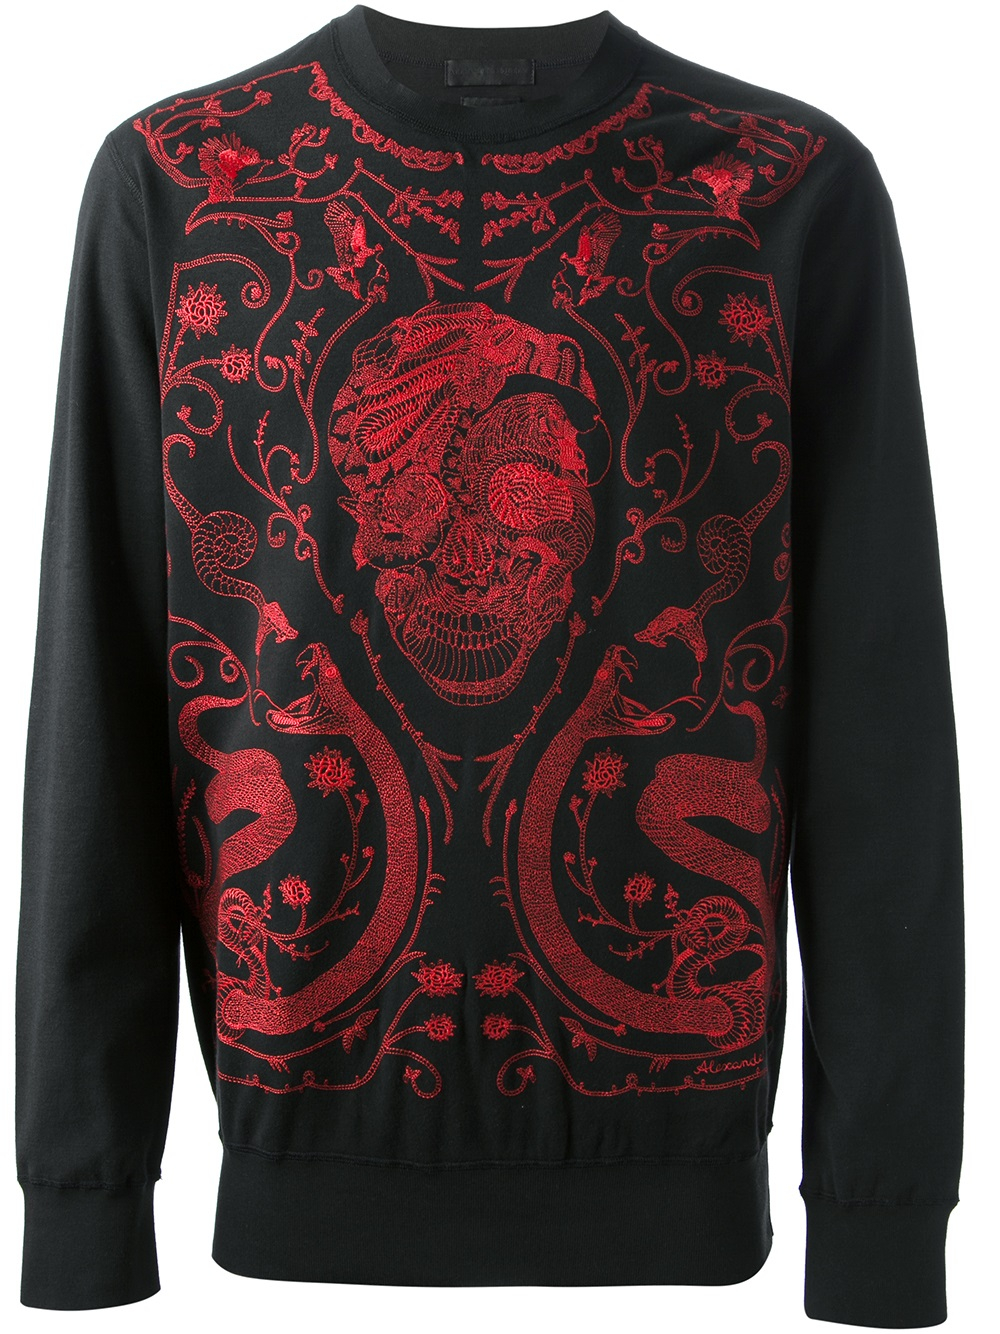 Lyst - Alexander Mcqueen Skull Pattern Sweatshirt in Black for Men